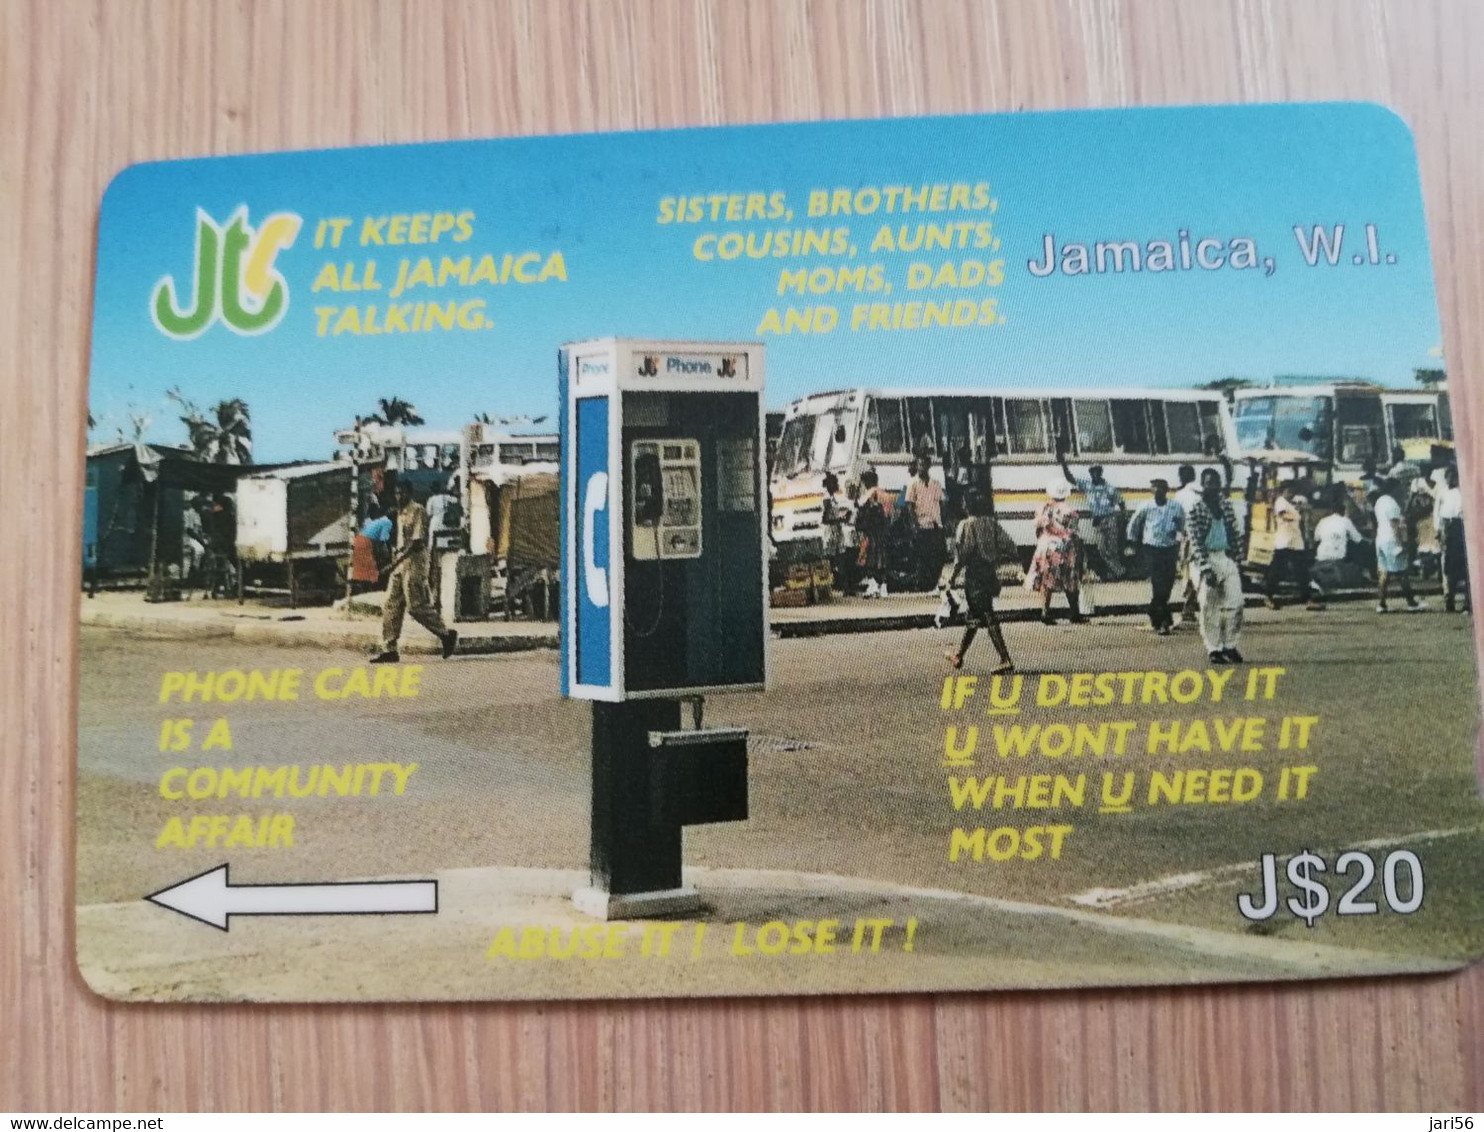 JAMAICA  J$20-  GPT CARD   KEEPS JAMAICA TALKING CONTROL NR: 14JAMD   Fine Used Card  **3234** - Jamaïque